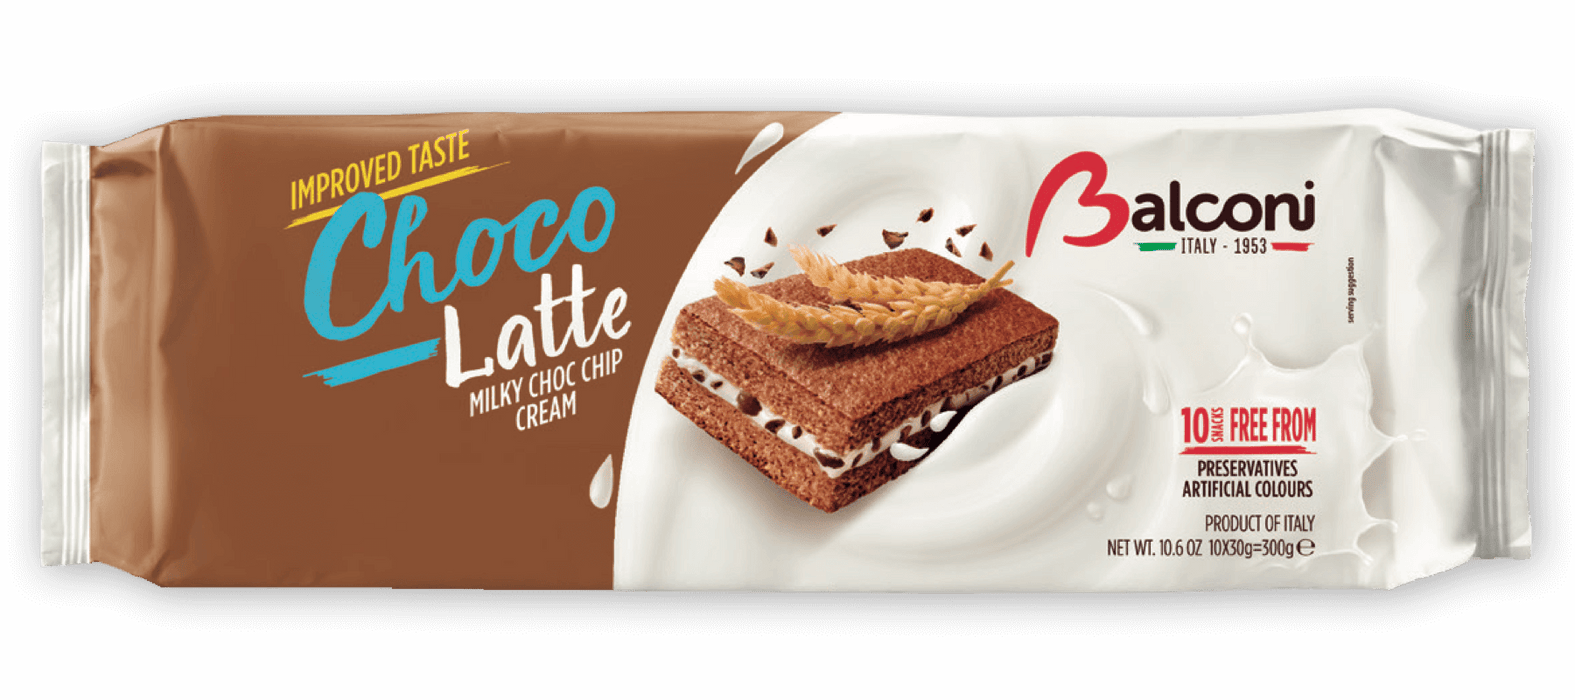 Balconi Choc Latte, Milky Choc Chip Cream, 10.6 oz | 300g